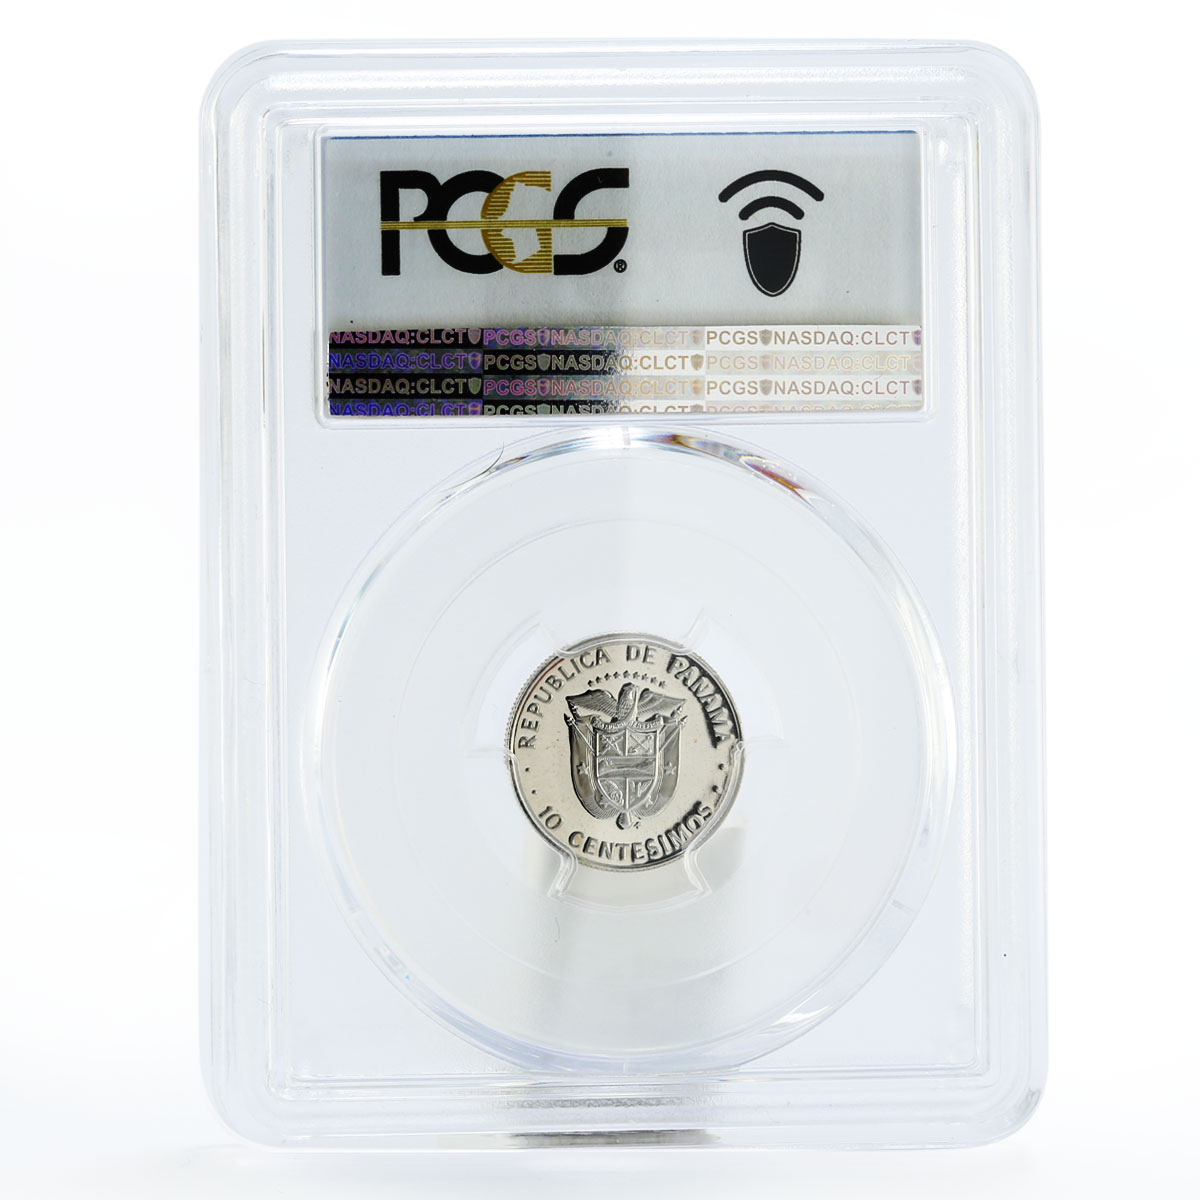 Panama 10 centesimos President Manuel E. Amador PR69 PCGS proof nickel coin 1981